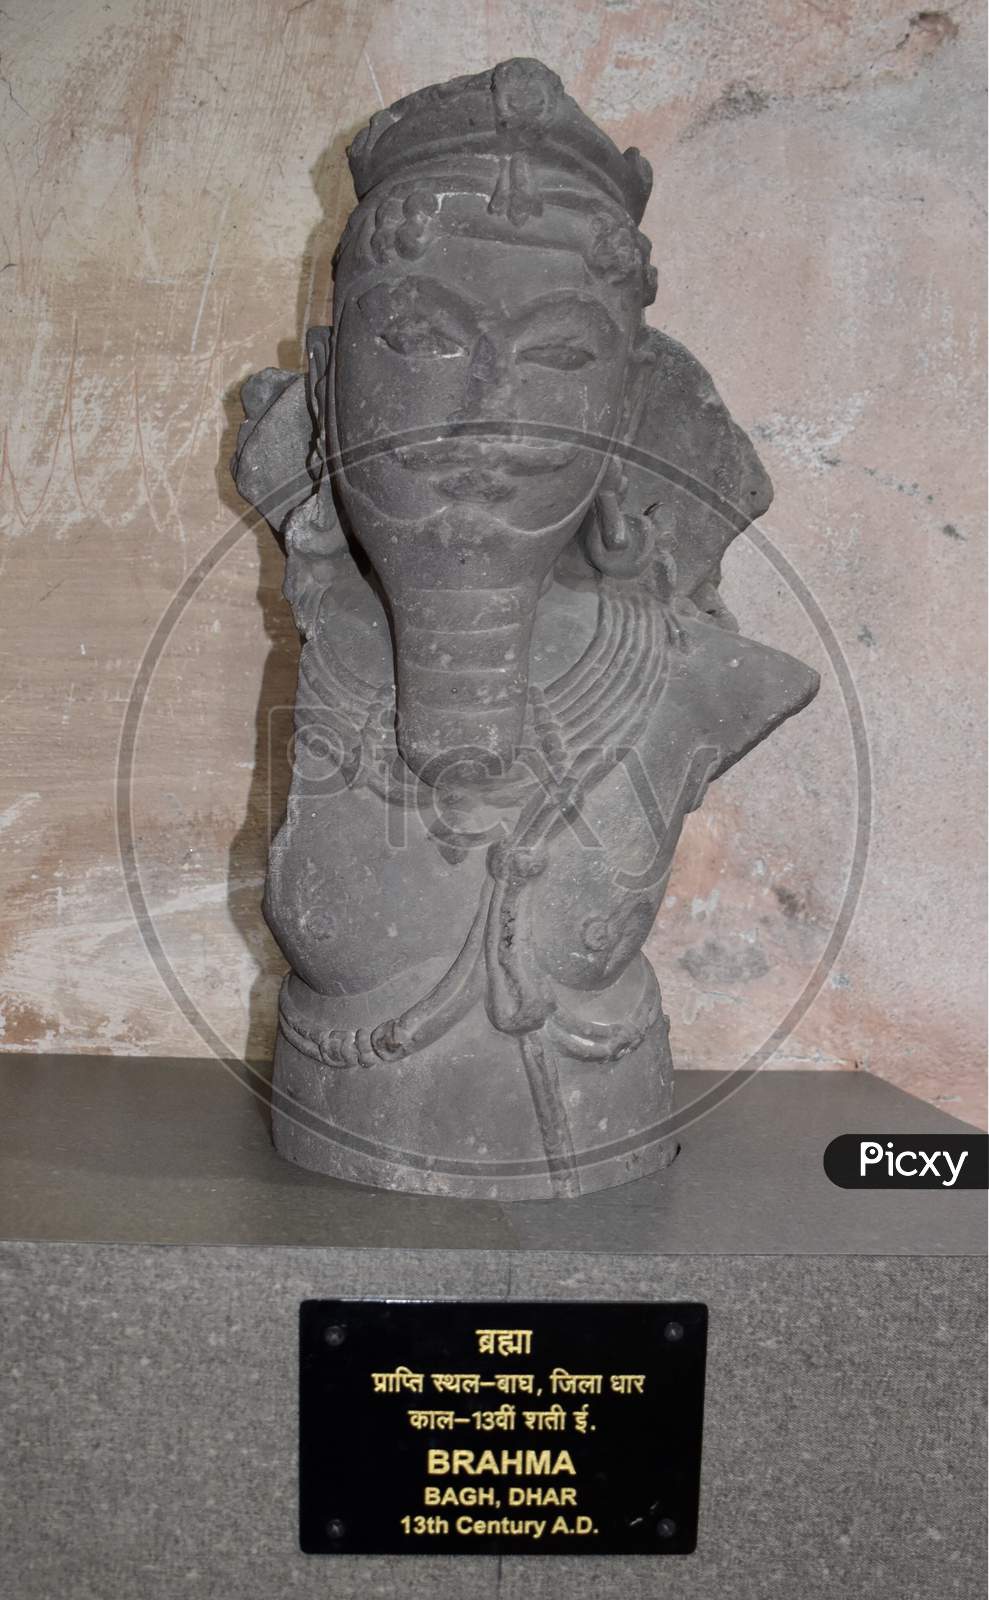 Gwalior, Madhya Pradesh/India - March 15, 2020 : Sculpture Of Brahma Built In 13Th Century A.D.